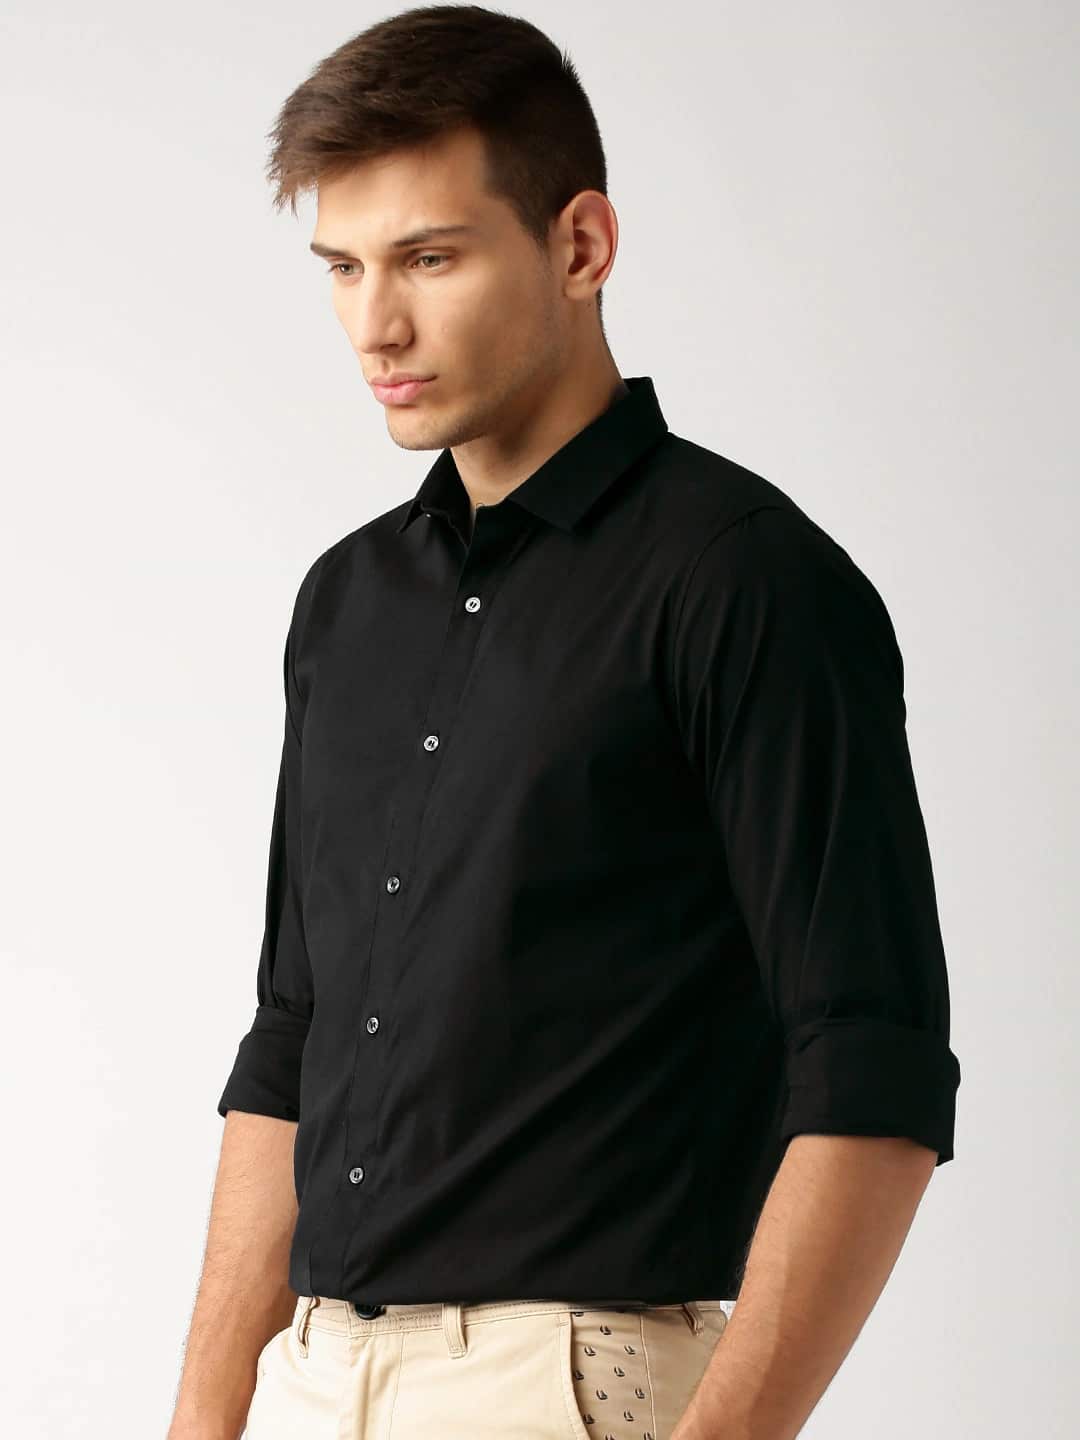 Men's Black Formal Shirt